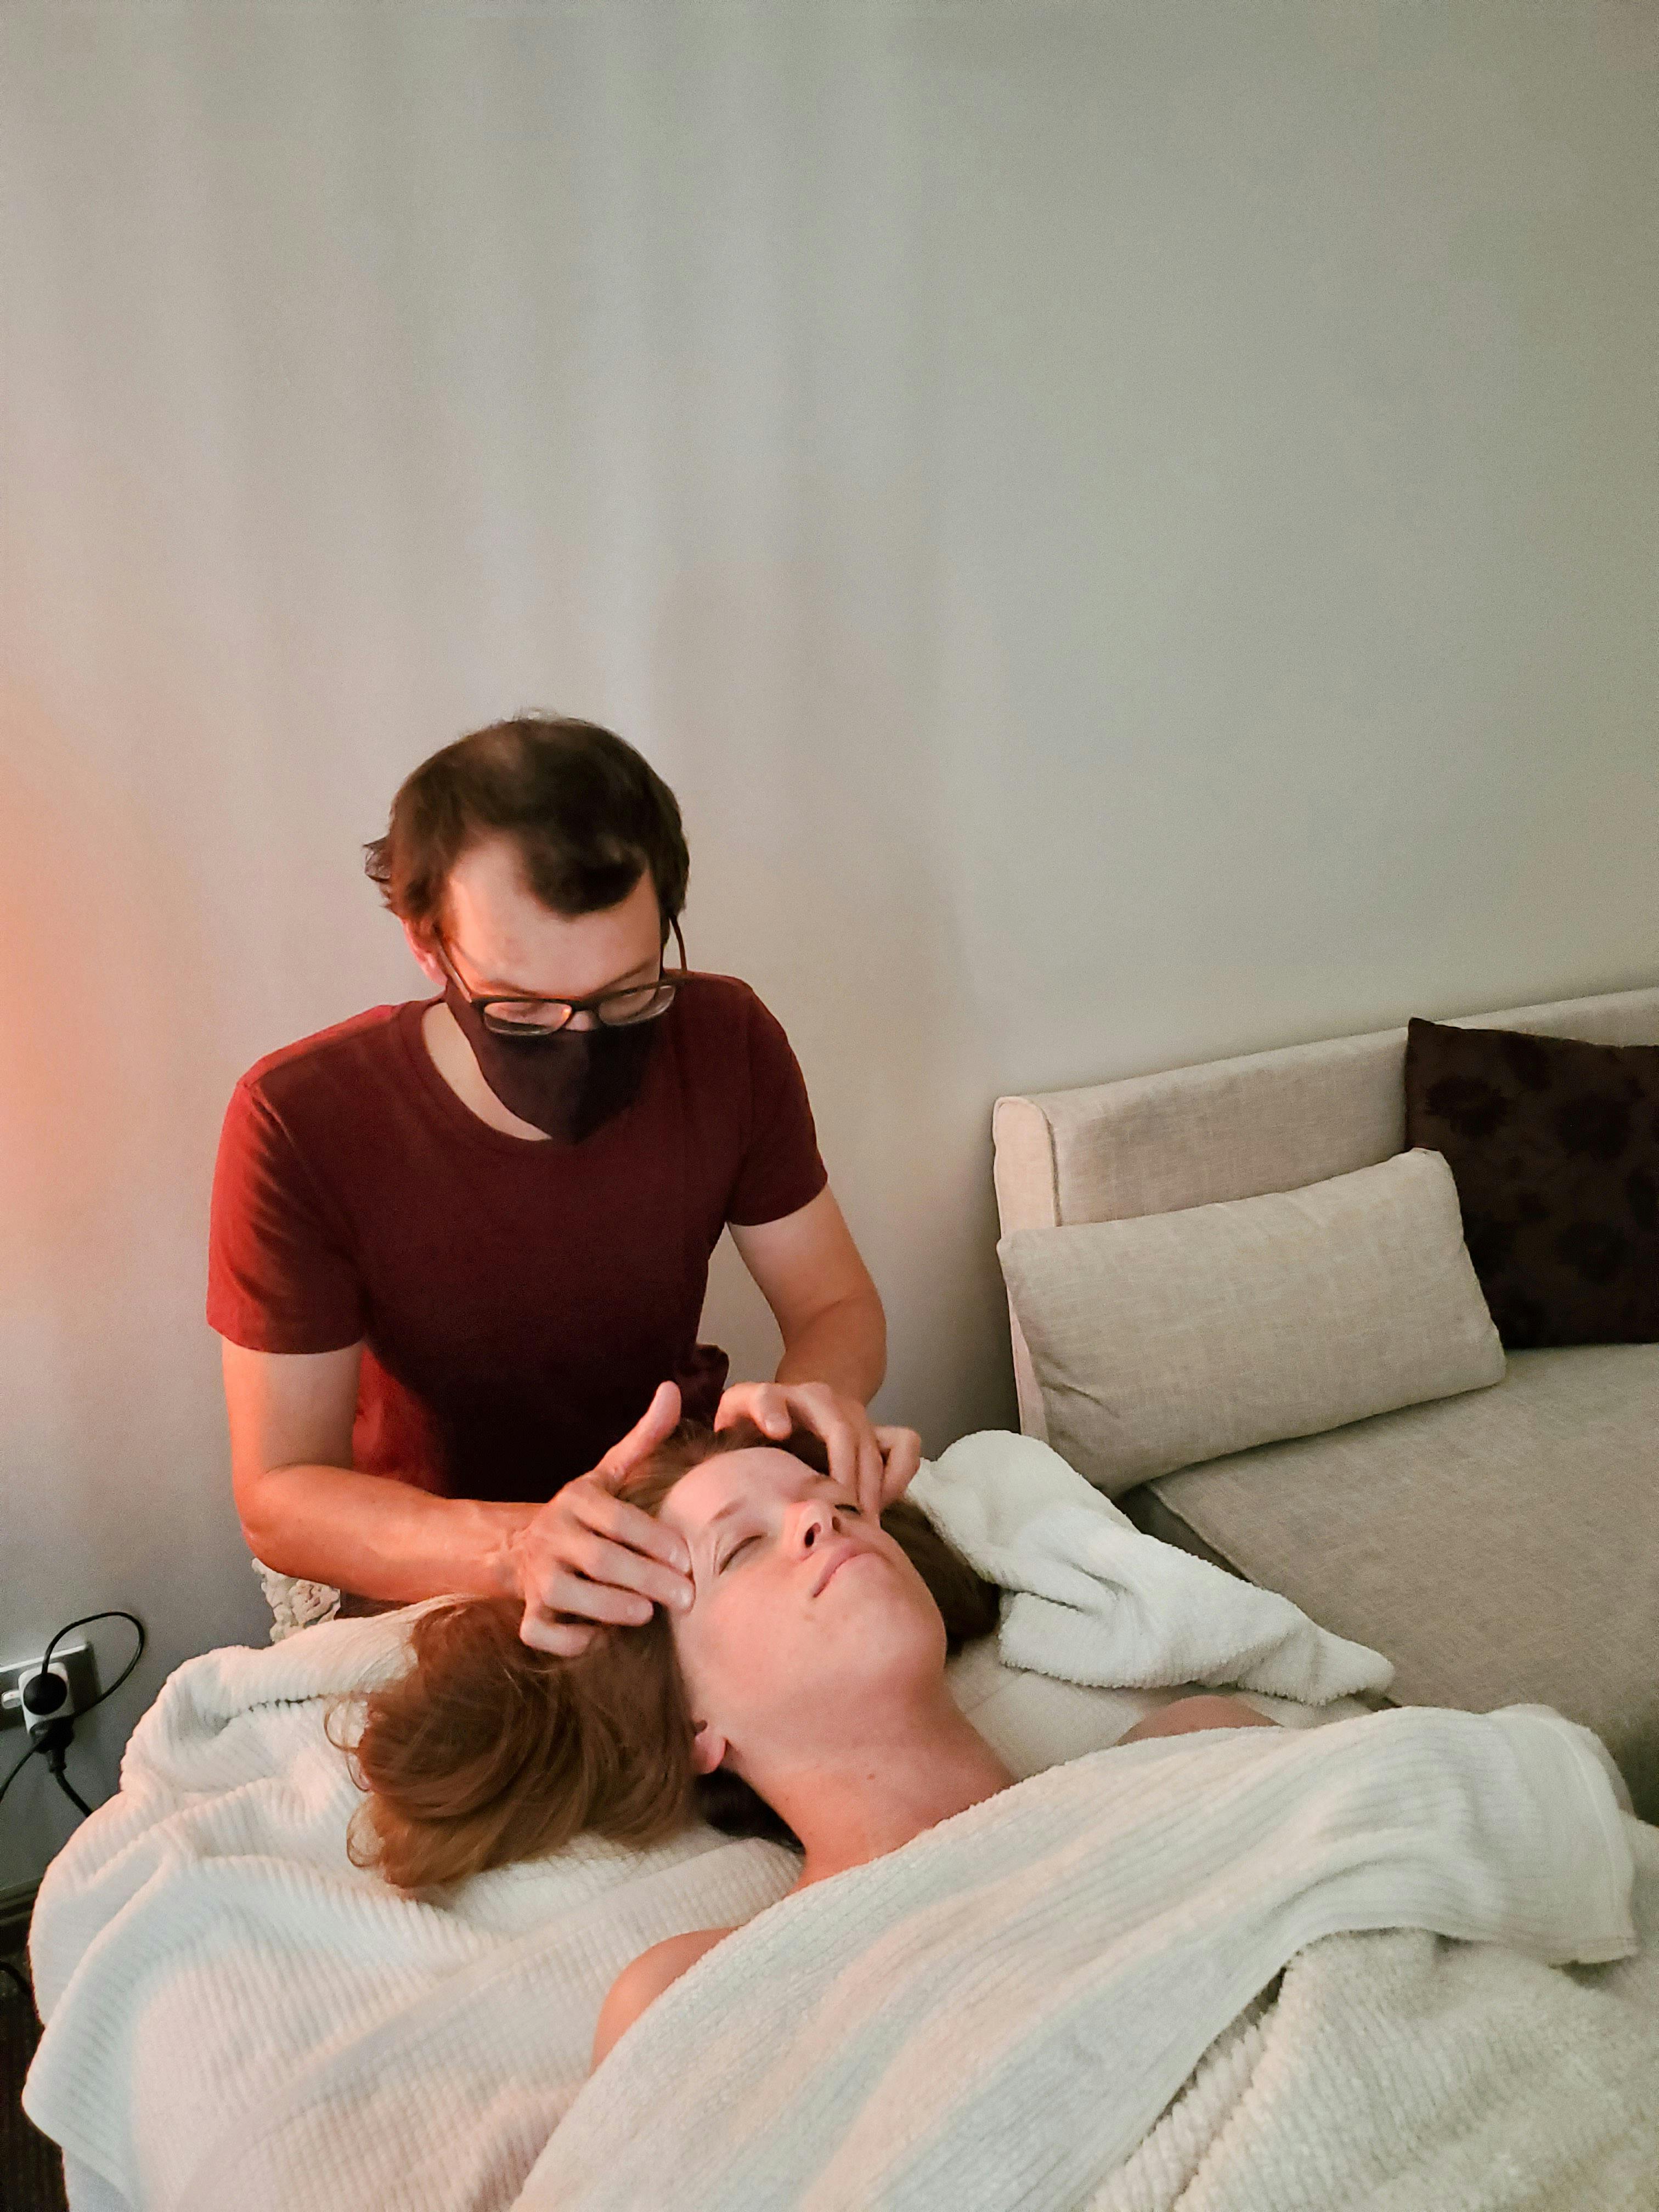 Massage Workshop for Couples | Sydney, Australia - Official Travel